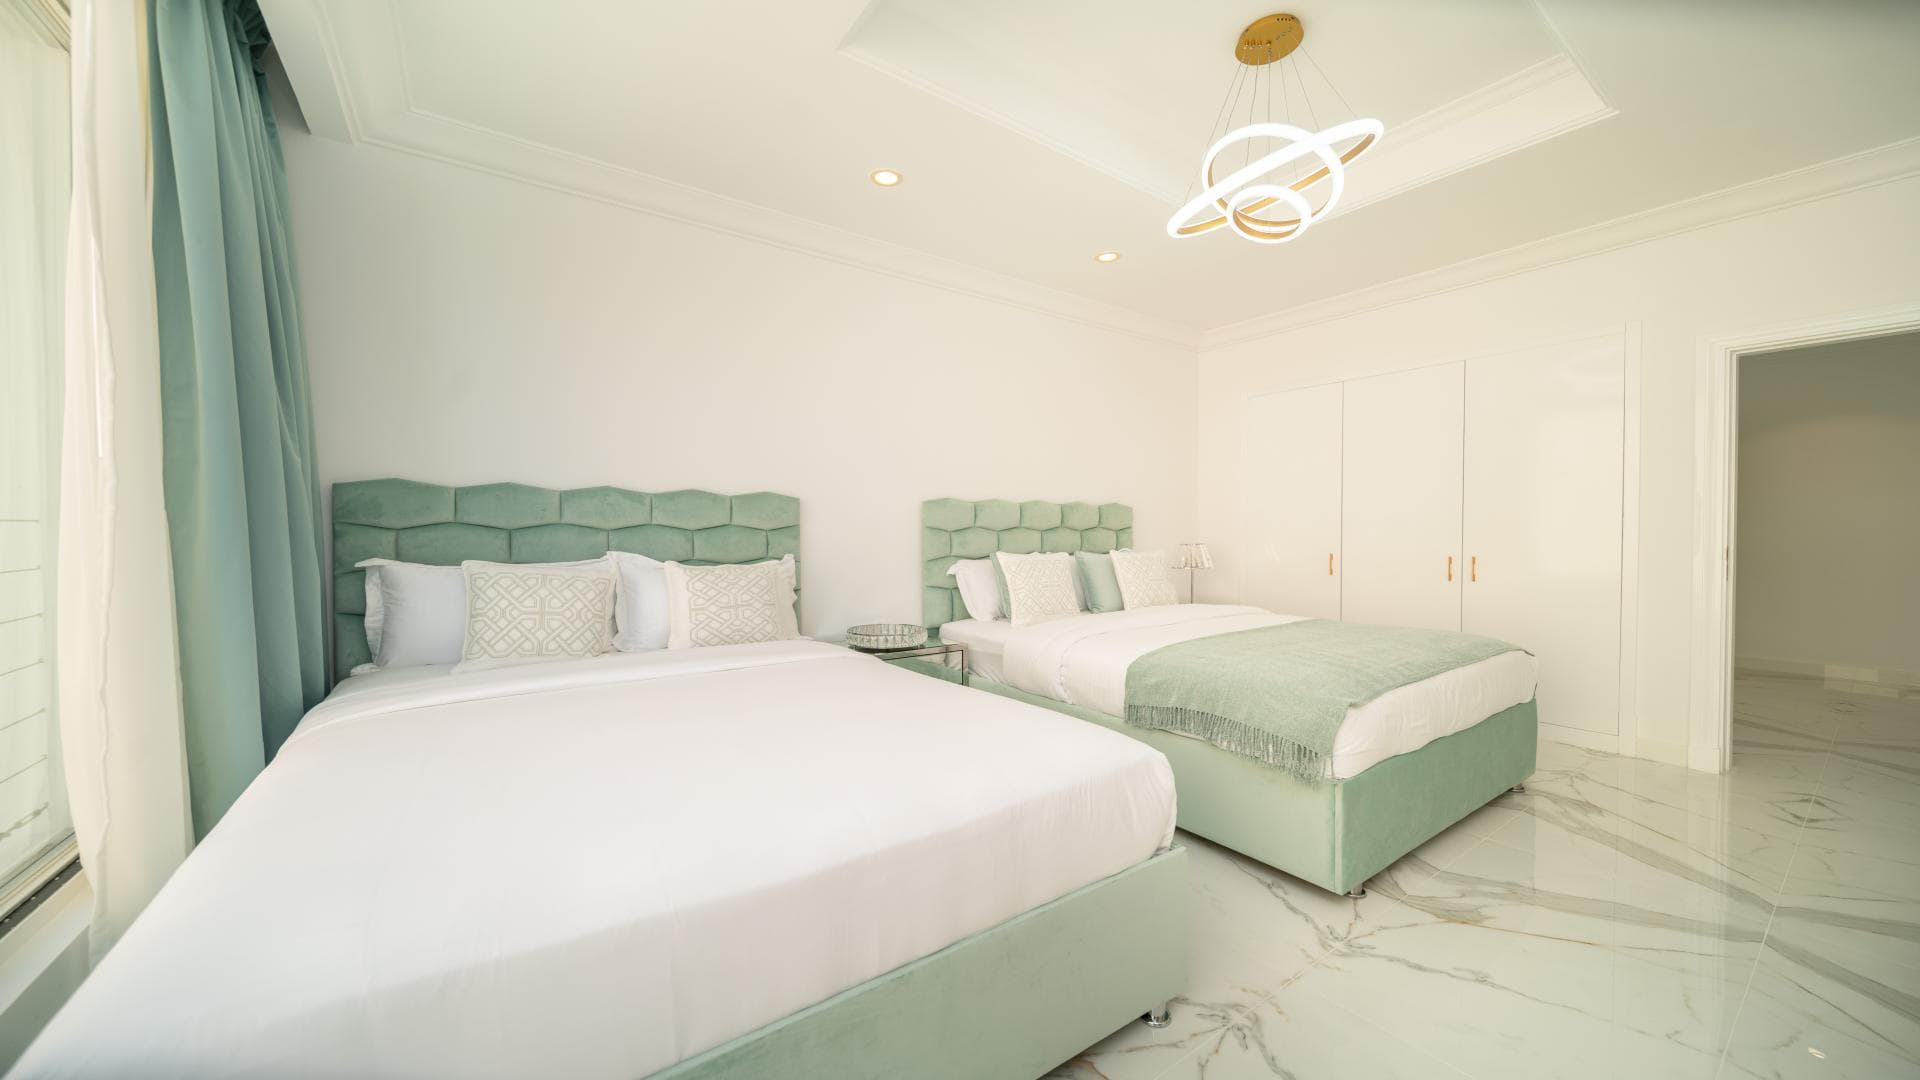 4 Bedroom Villa For Rent Mughal Lp36499 1075ef6bffdb3100.jpg